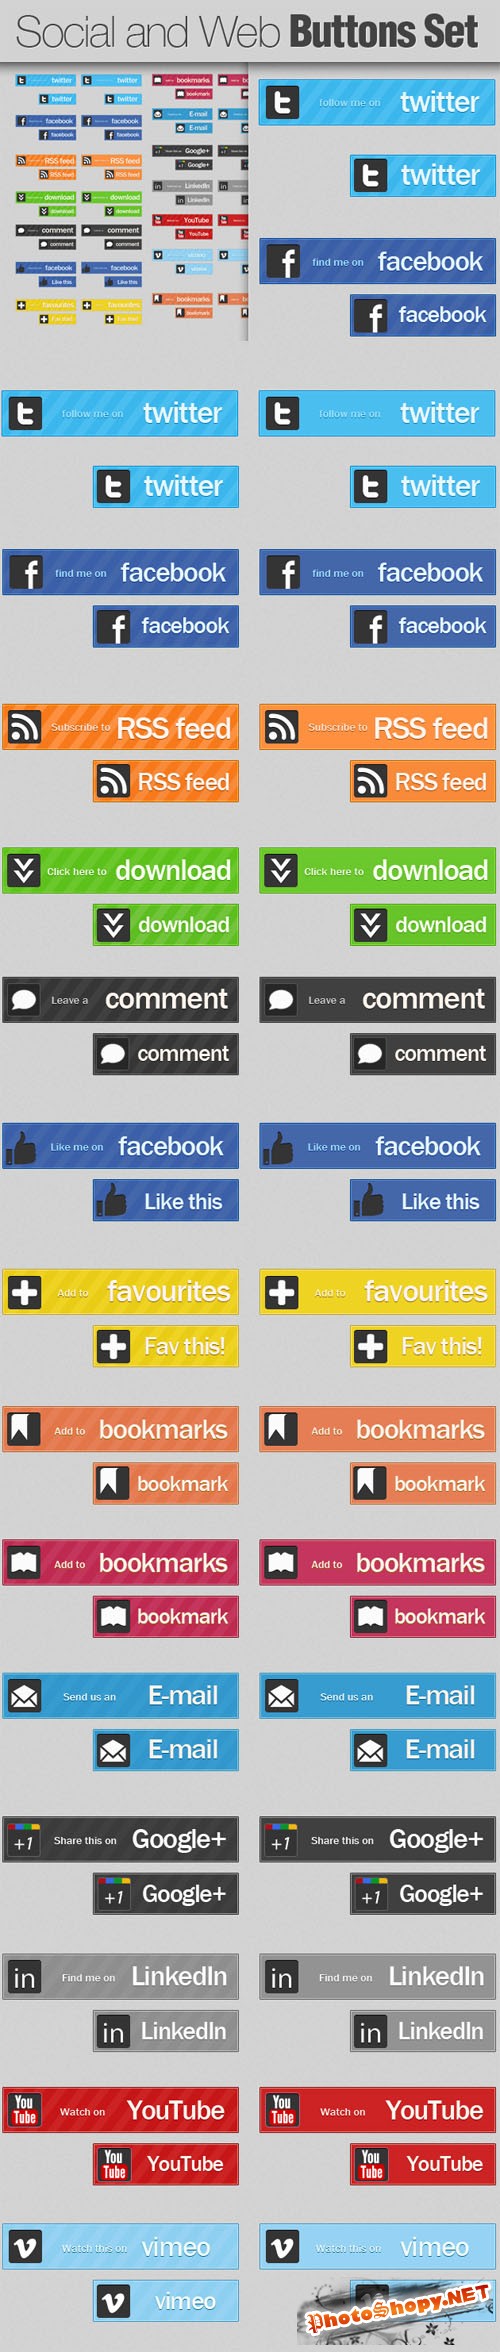 Designtnt - Social and Web Buttons